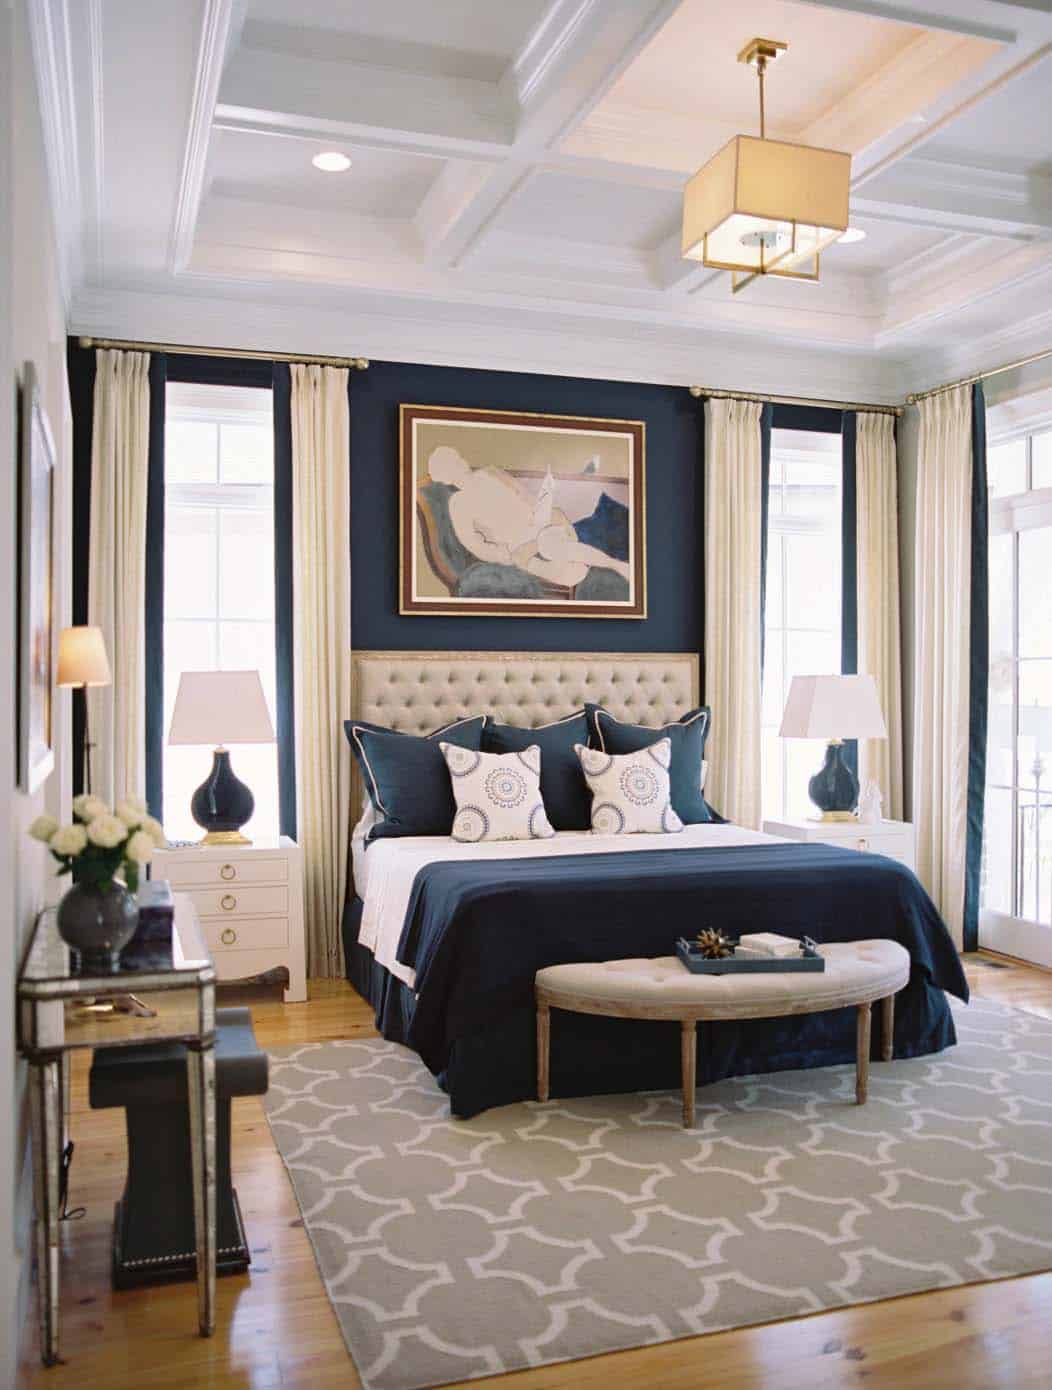 20+ Serene And Elegant Master Bedroom Decorating Ideas